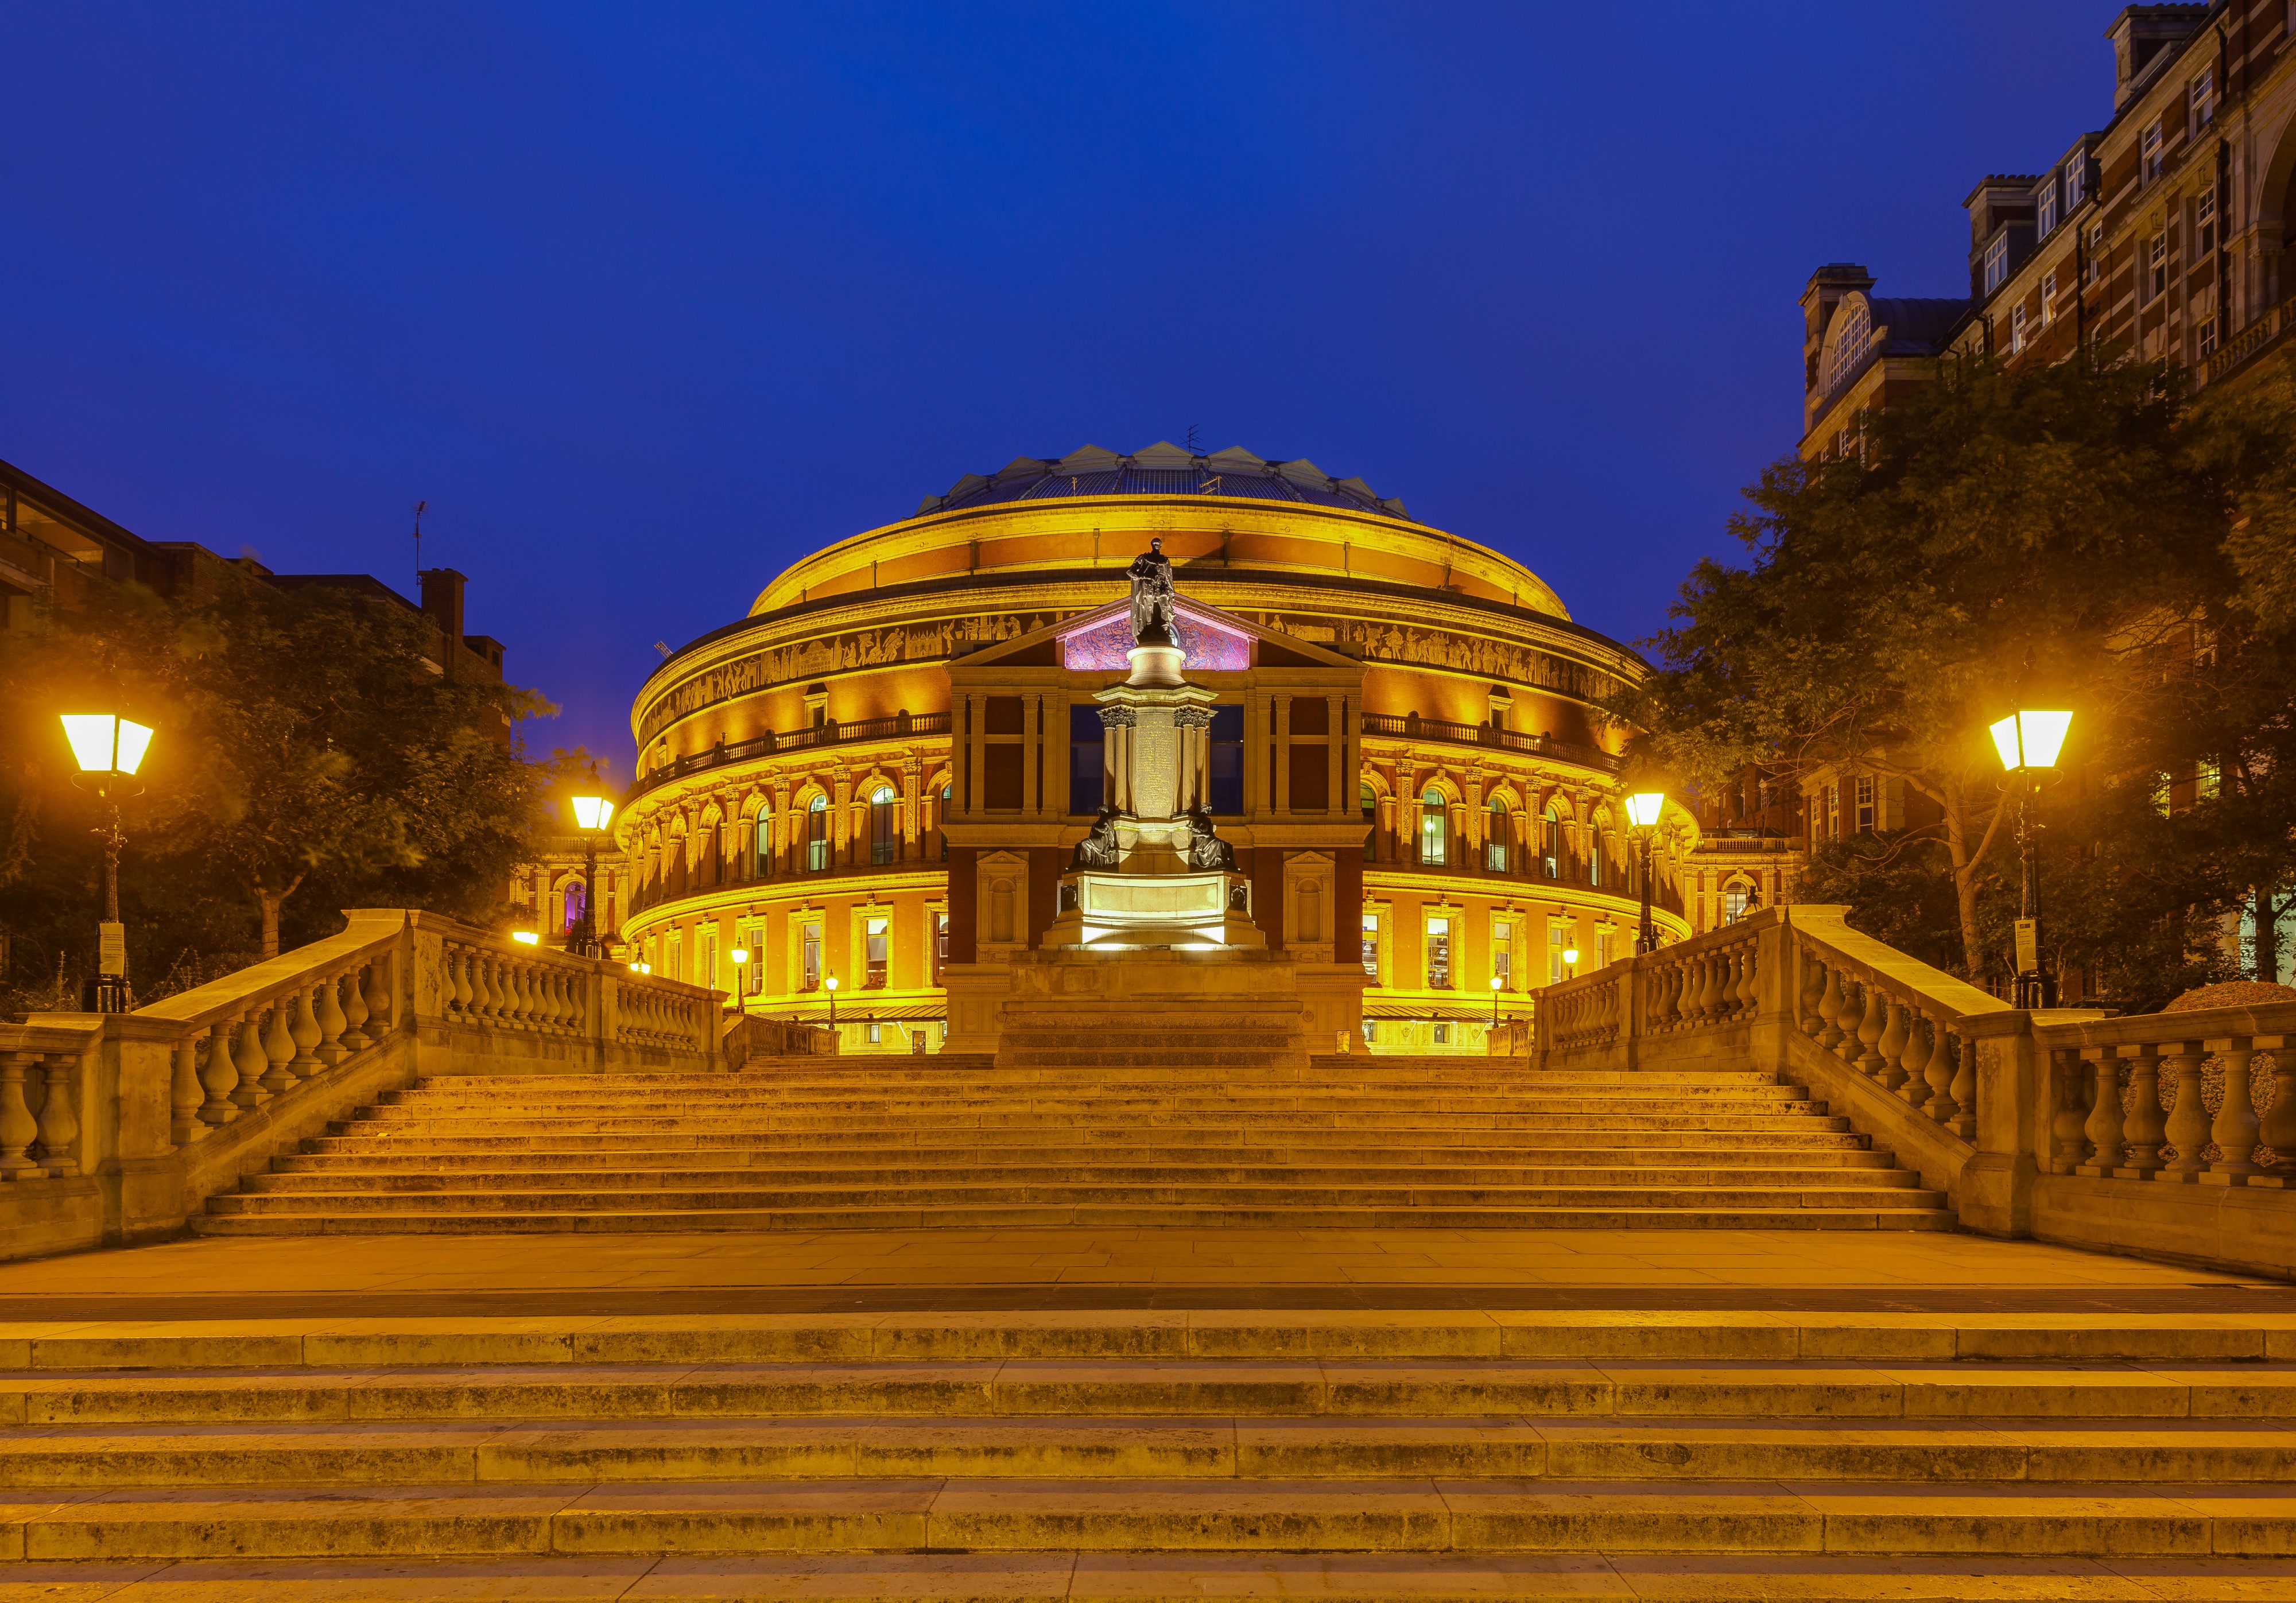 Sala Royal Albert, Londres, Inglaterra, 2014-08-09, DD 062-64 HDR